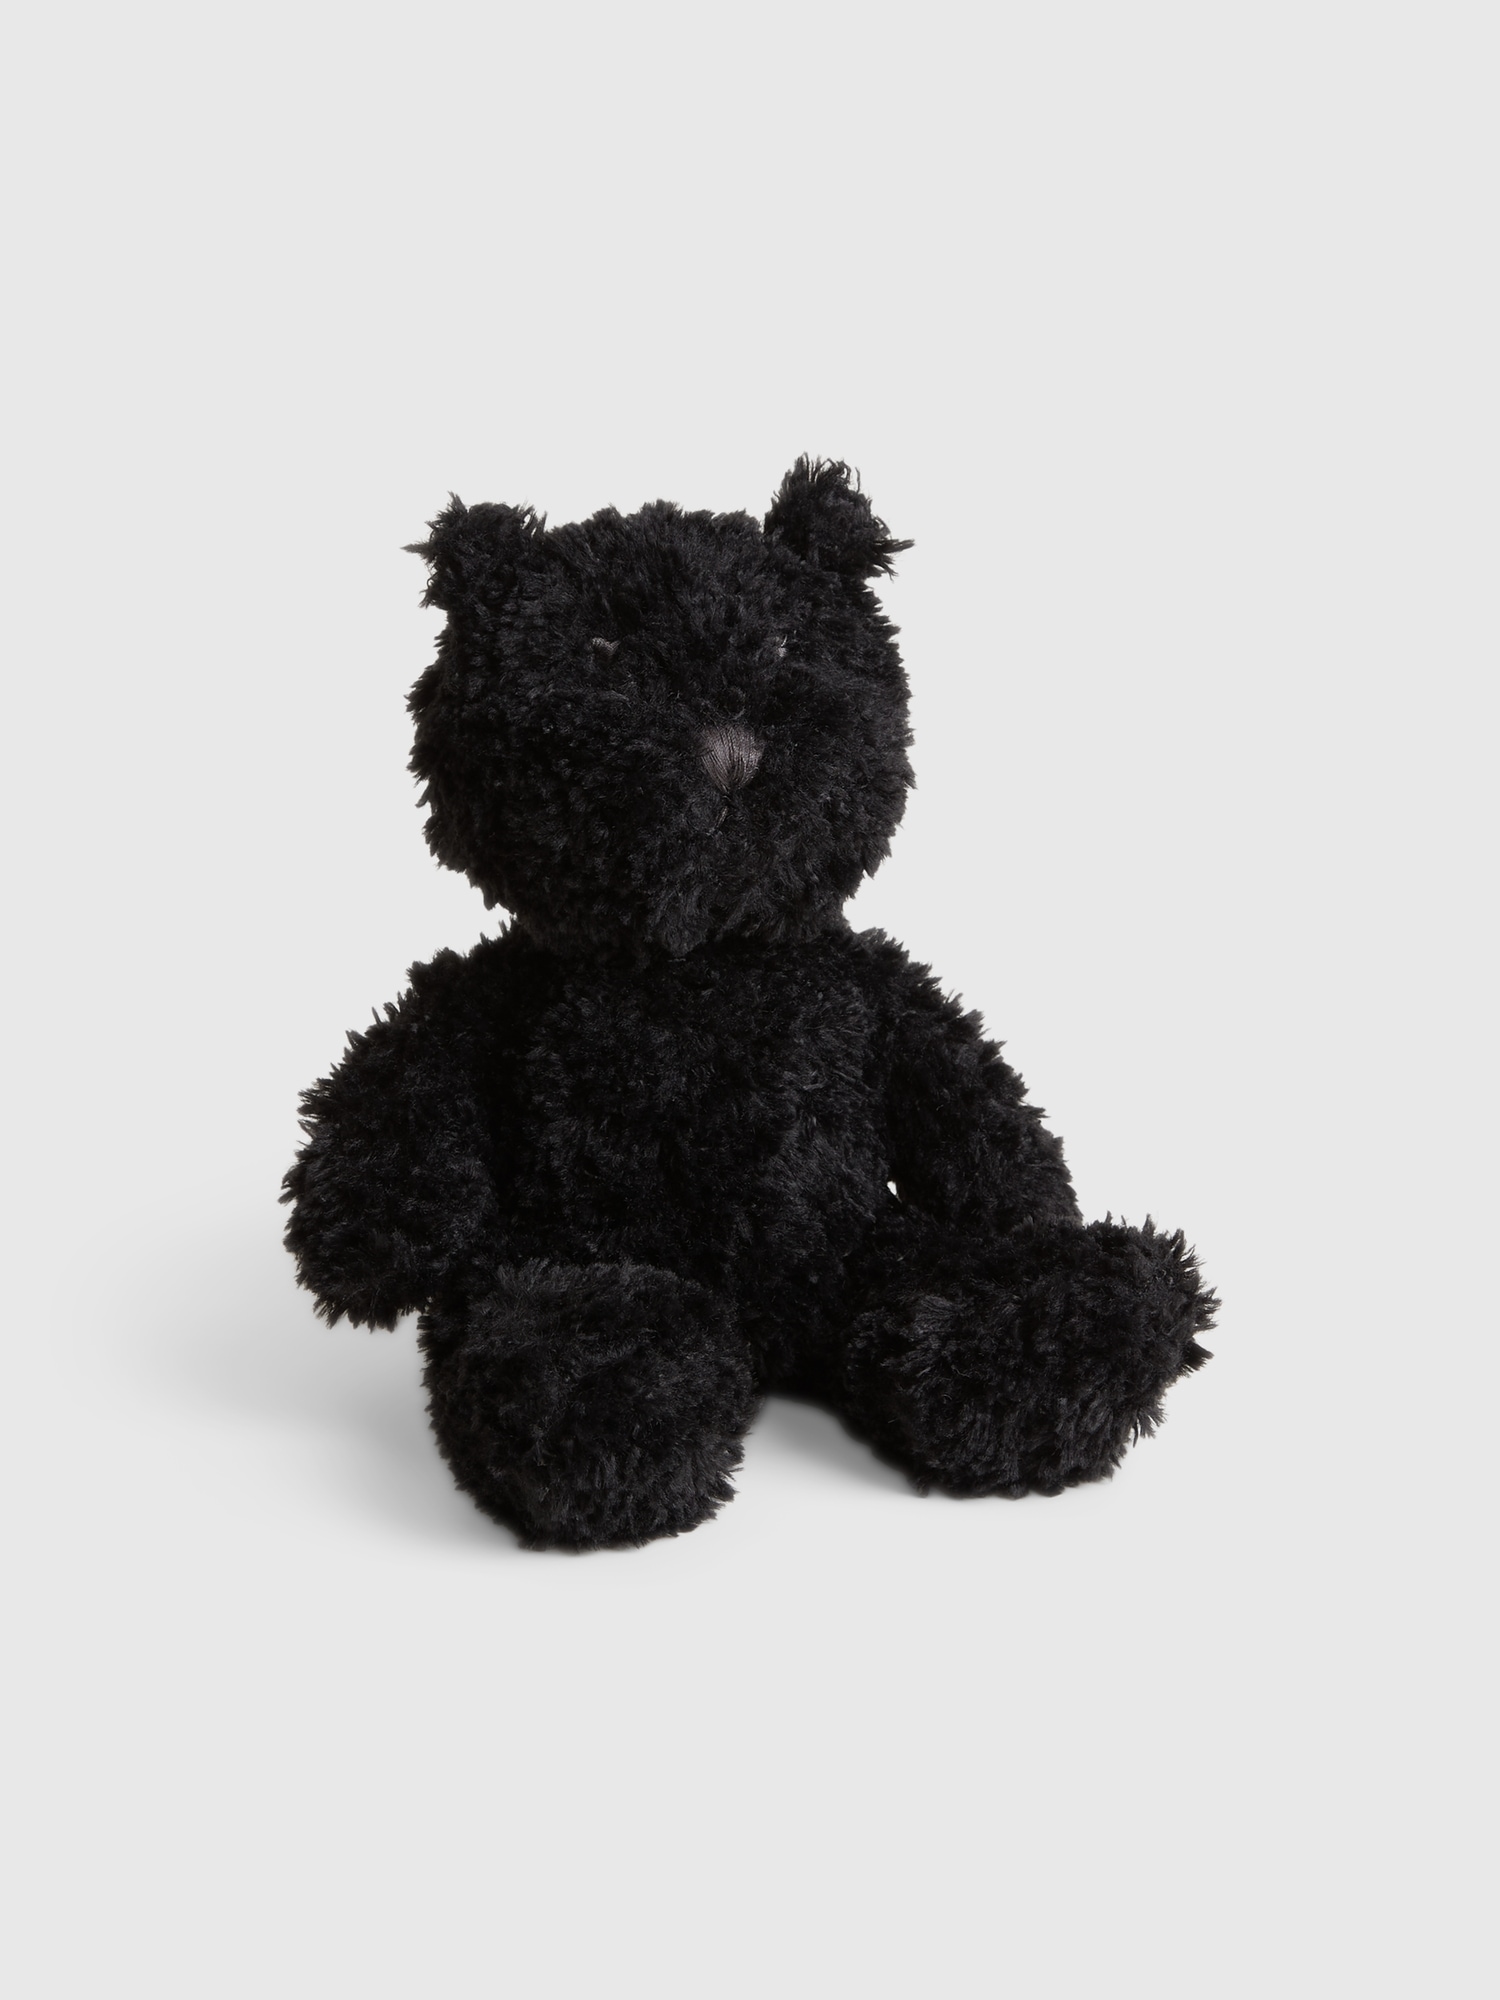 Gap Brannan Bear Toy - Medium In Black